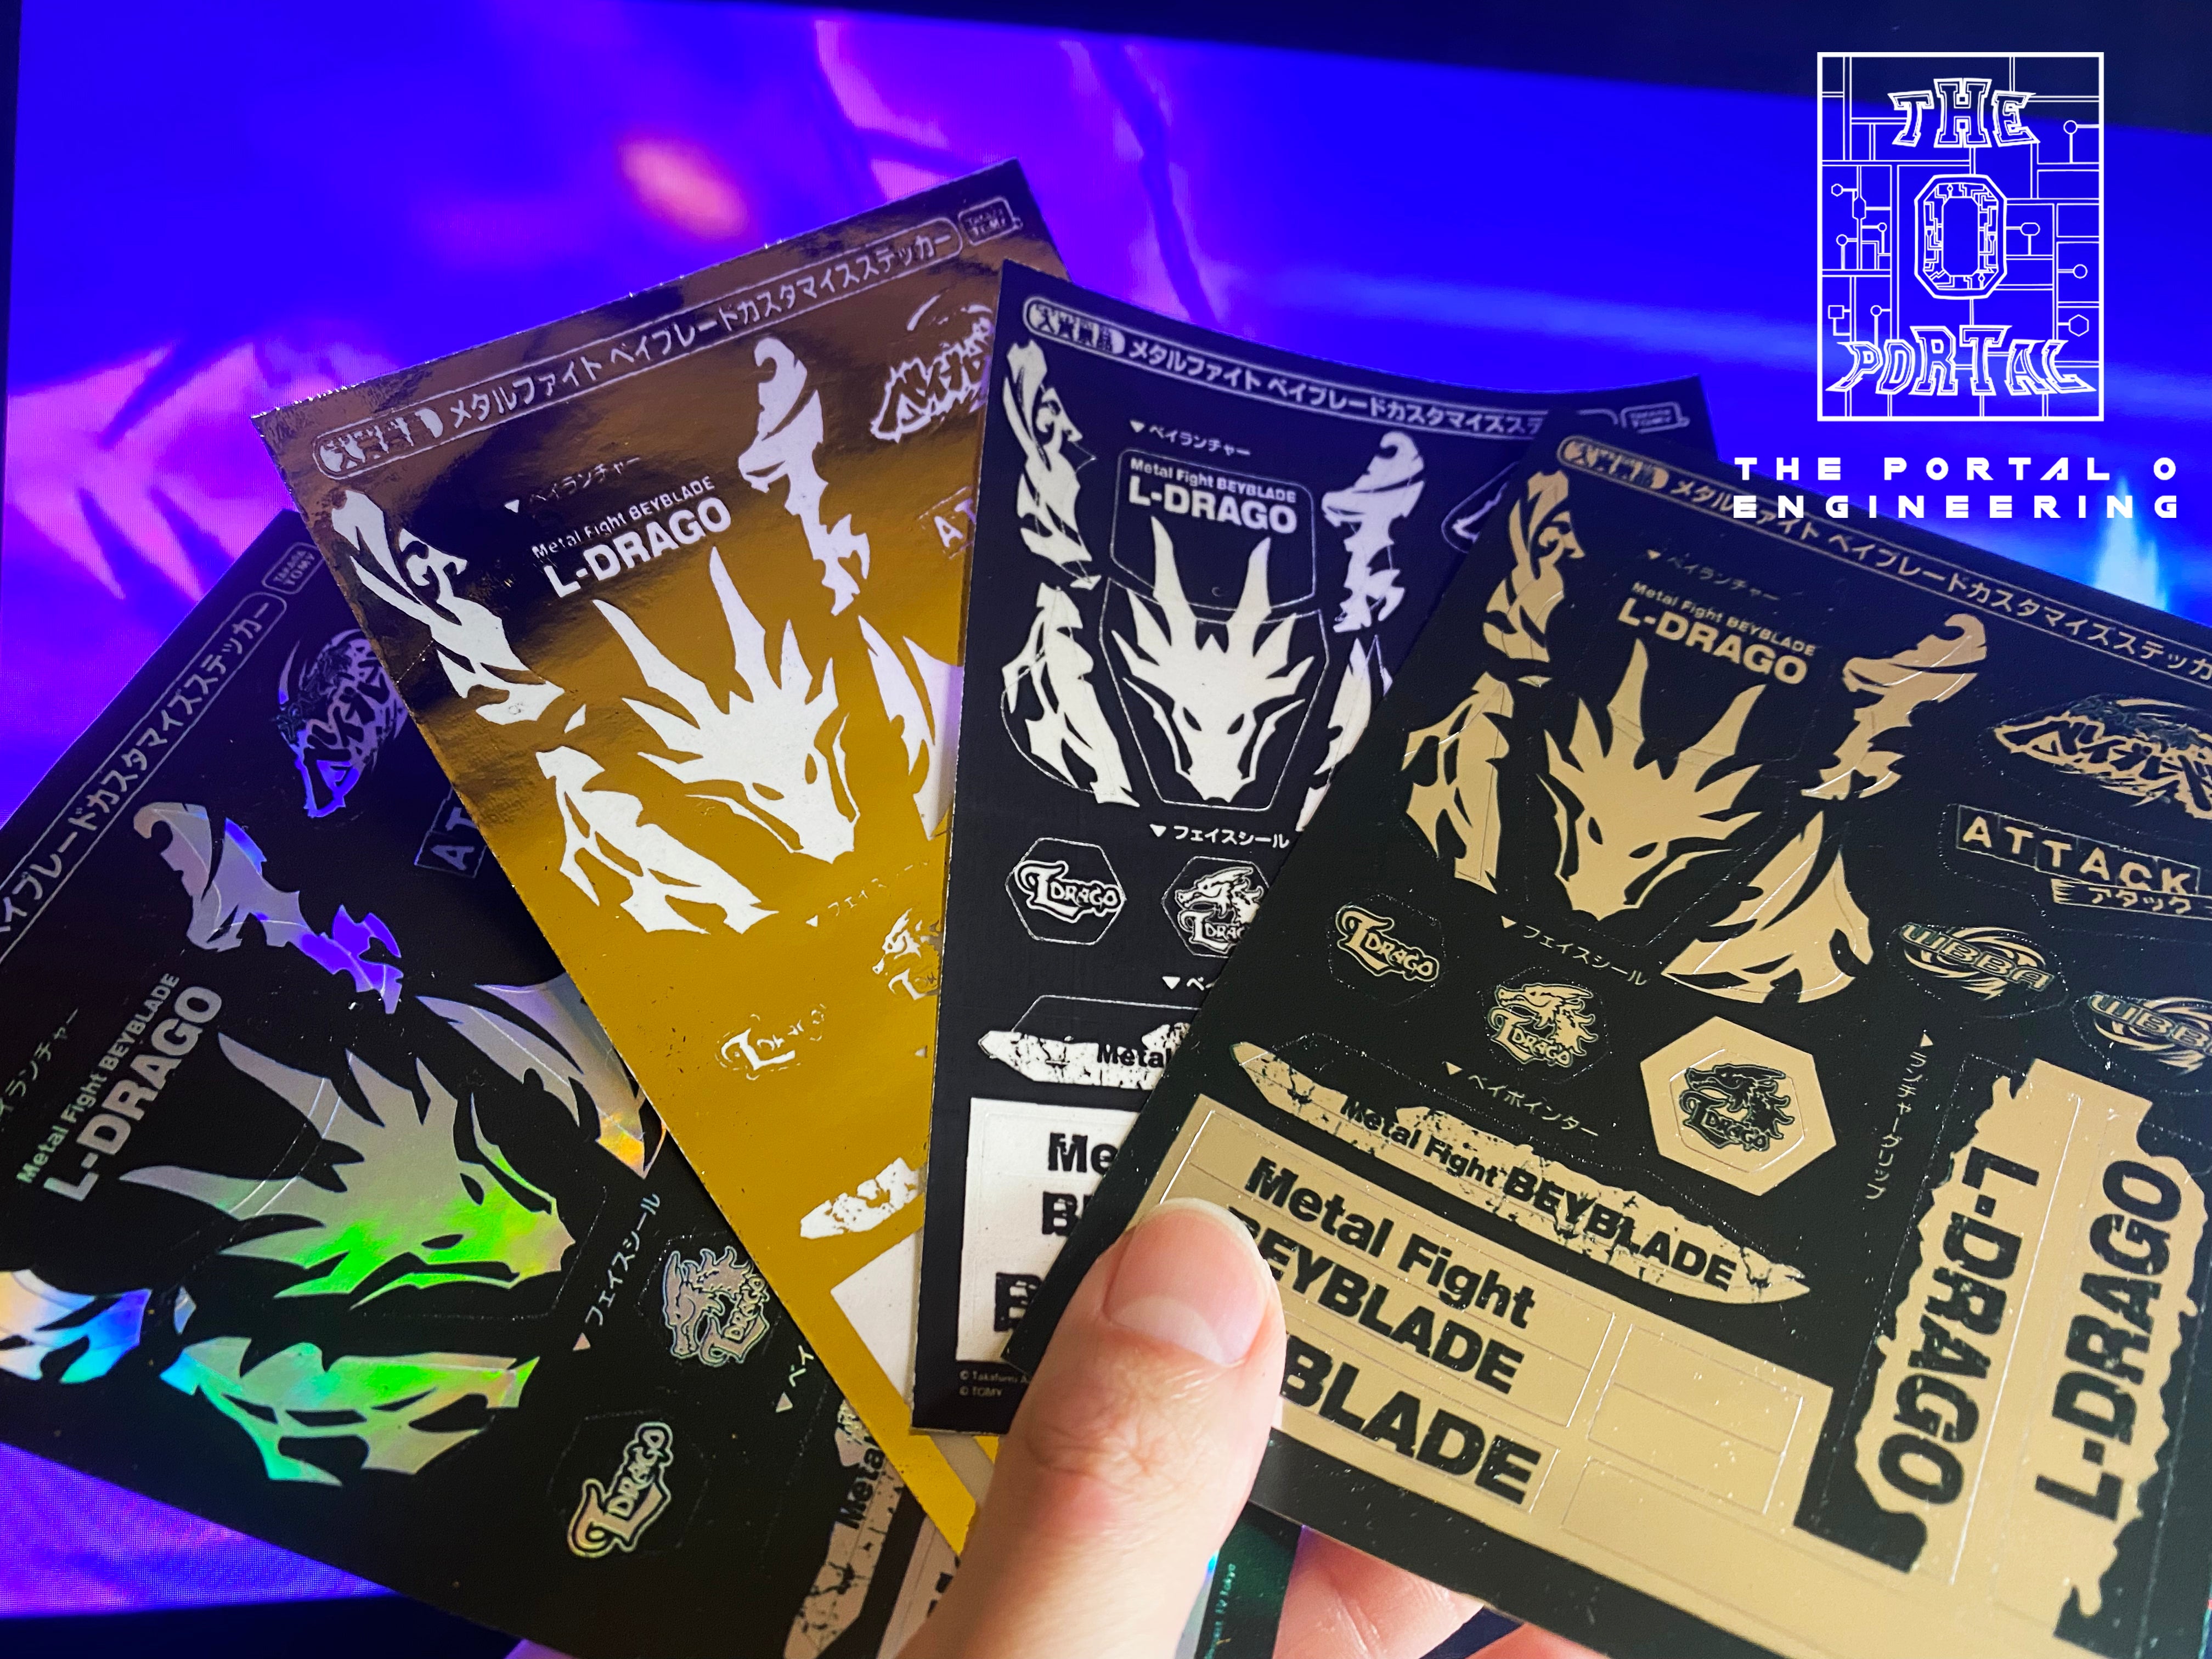 HEXSTAR SEGA Bakugan Battle Brawlers Attack card Japanese F/S